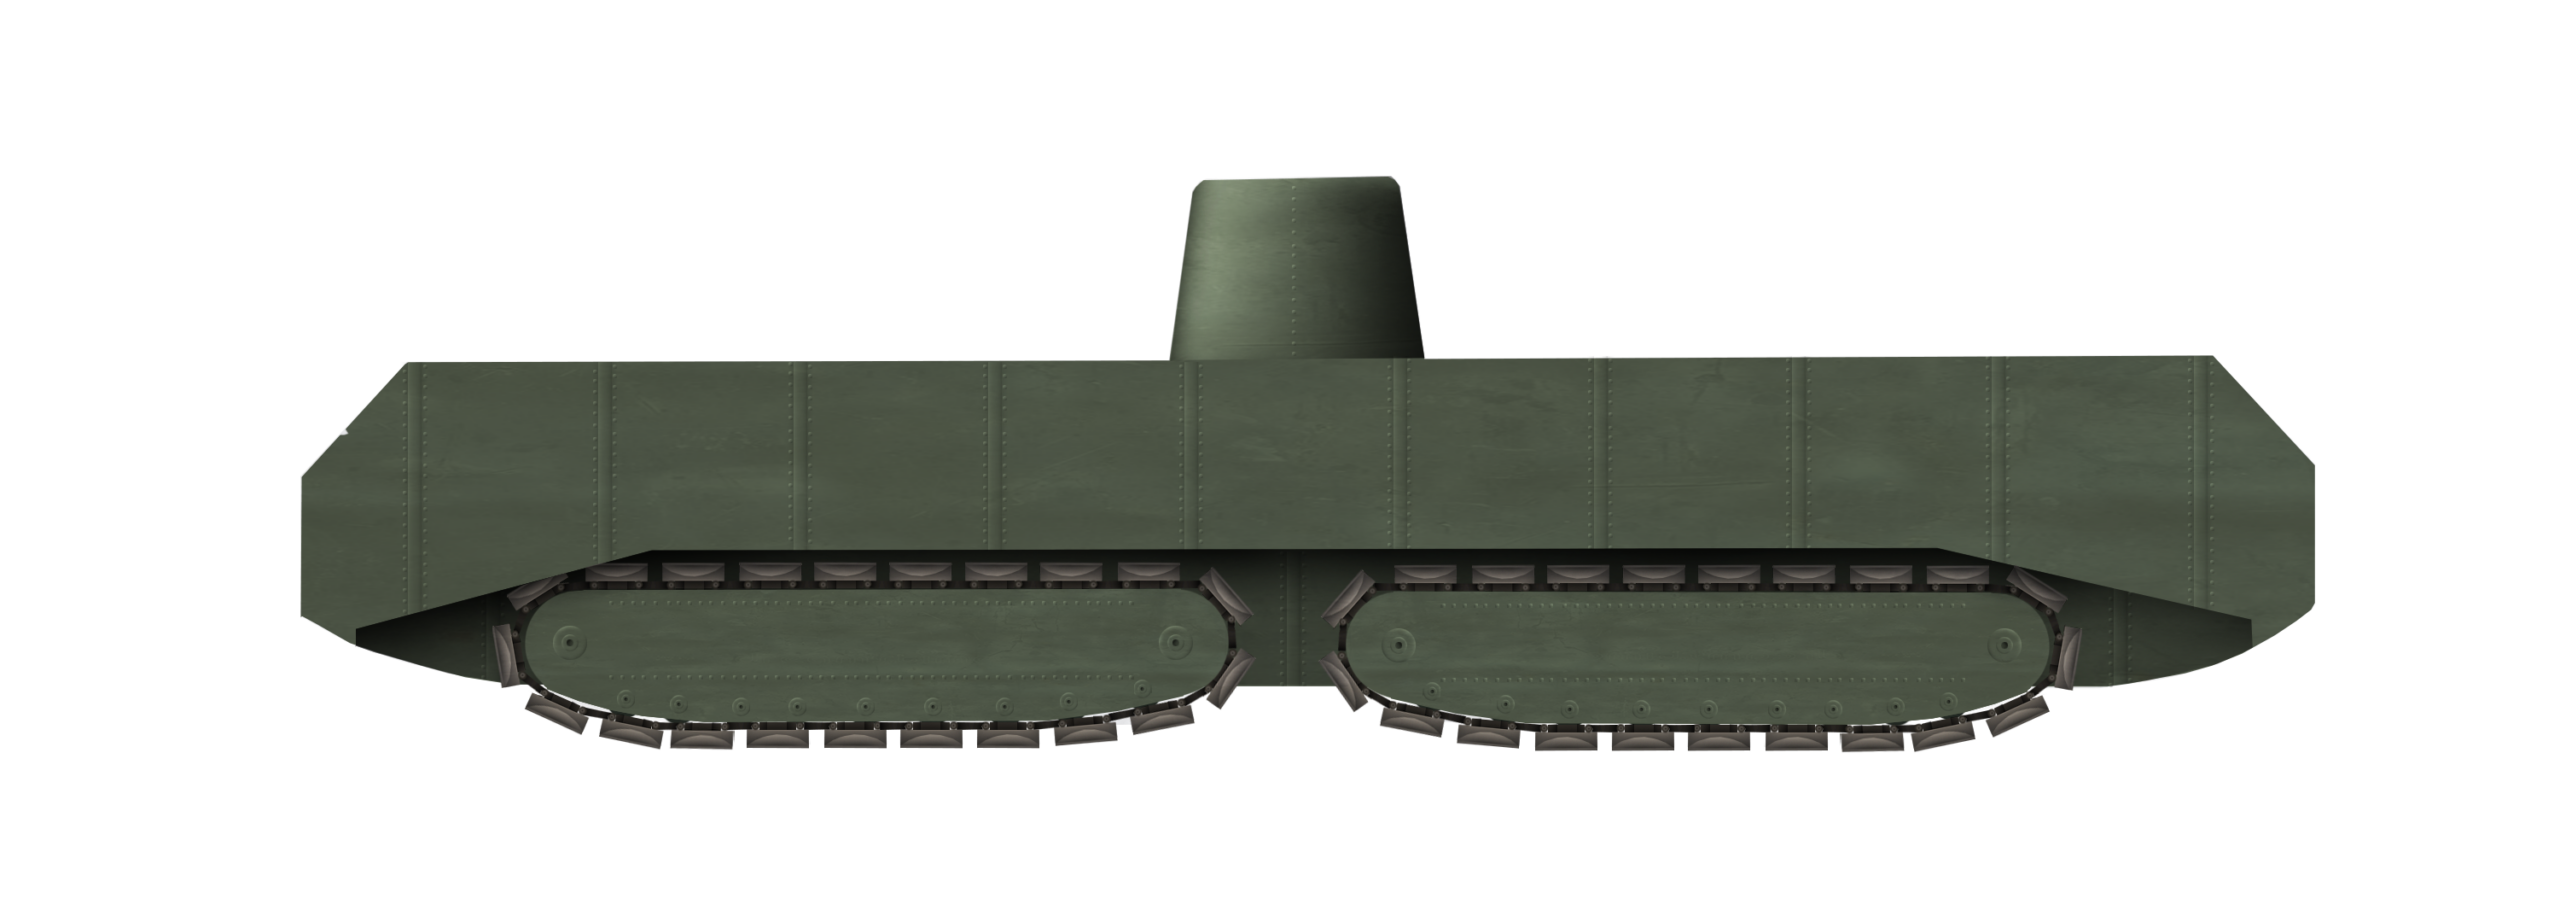 Soviet Prototype Tank, Call of Duty Wiki